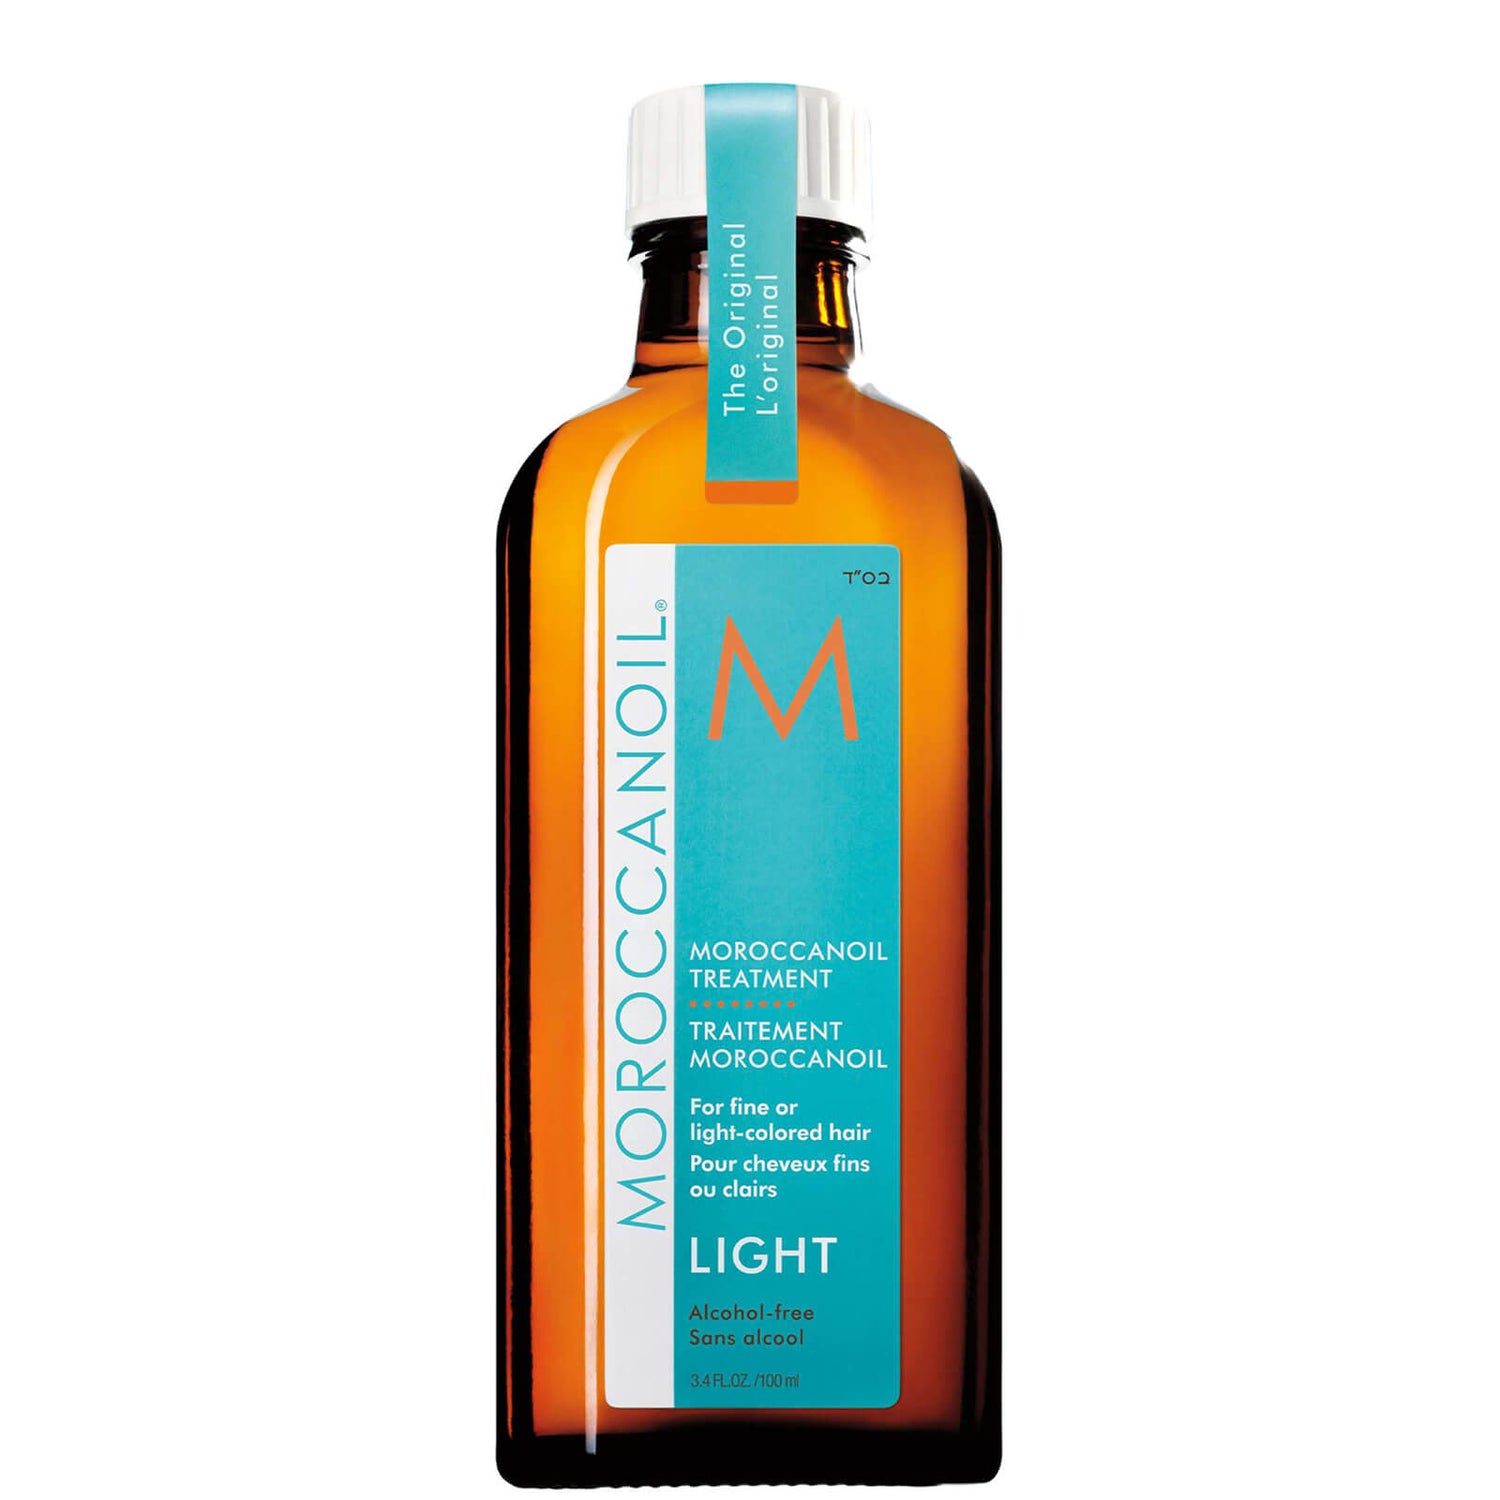 Moroccanoil Treatment Light 3.4 oz